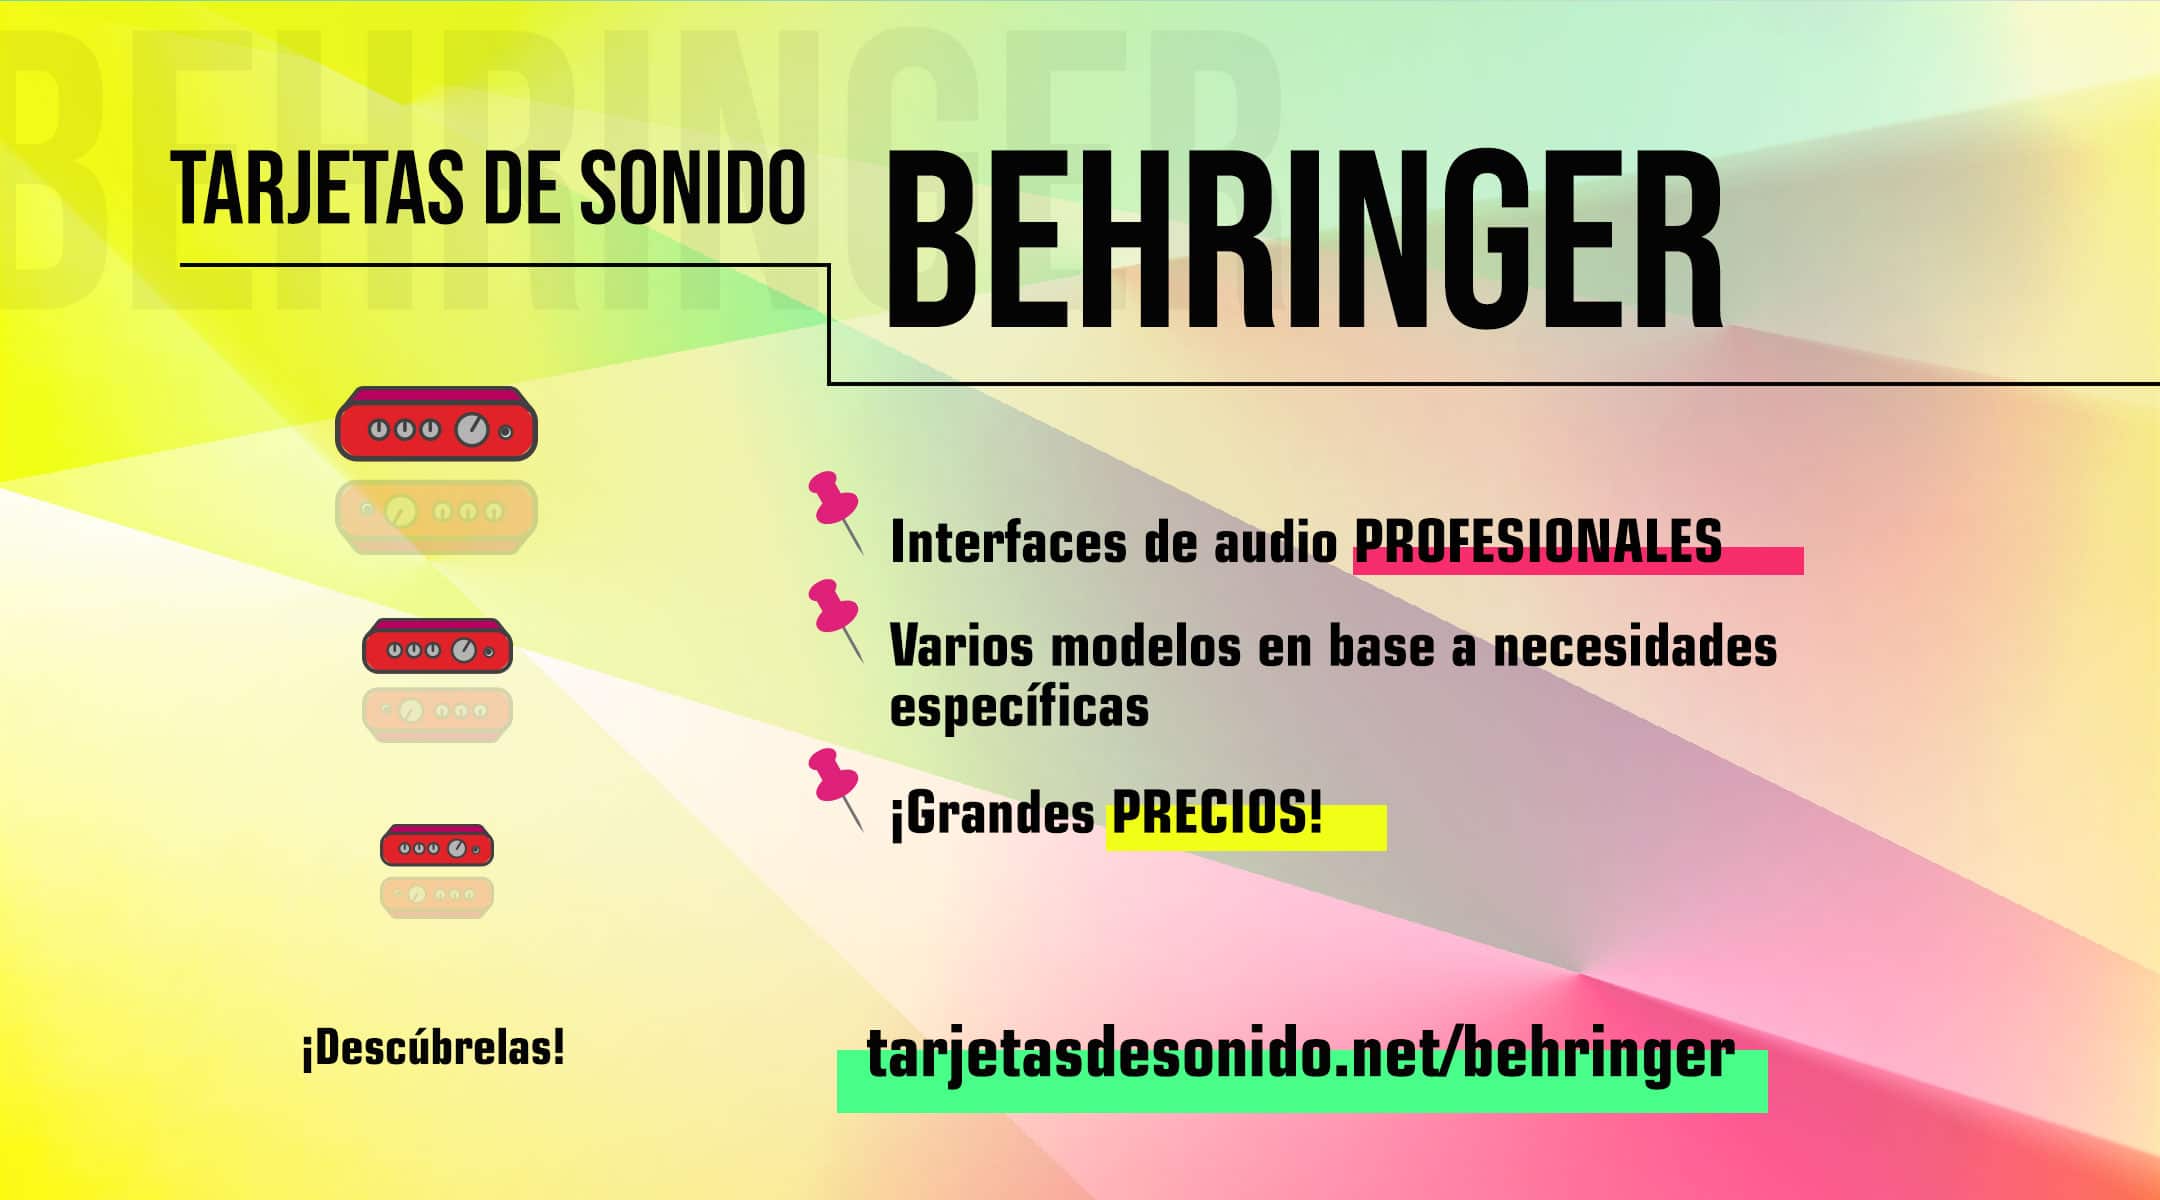 Tarjeta de sonido Behringer - DJMania